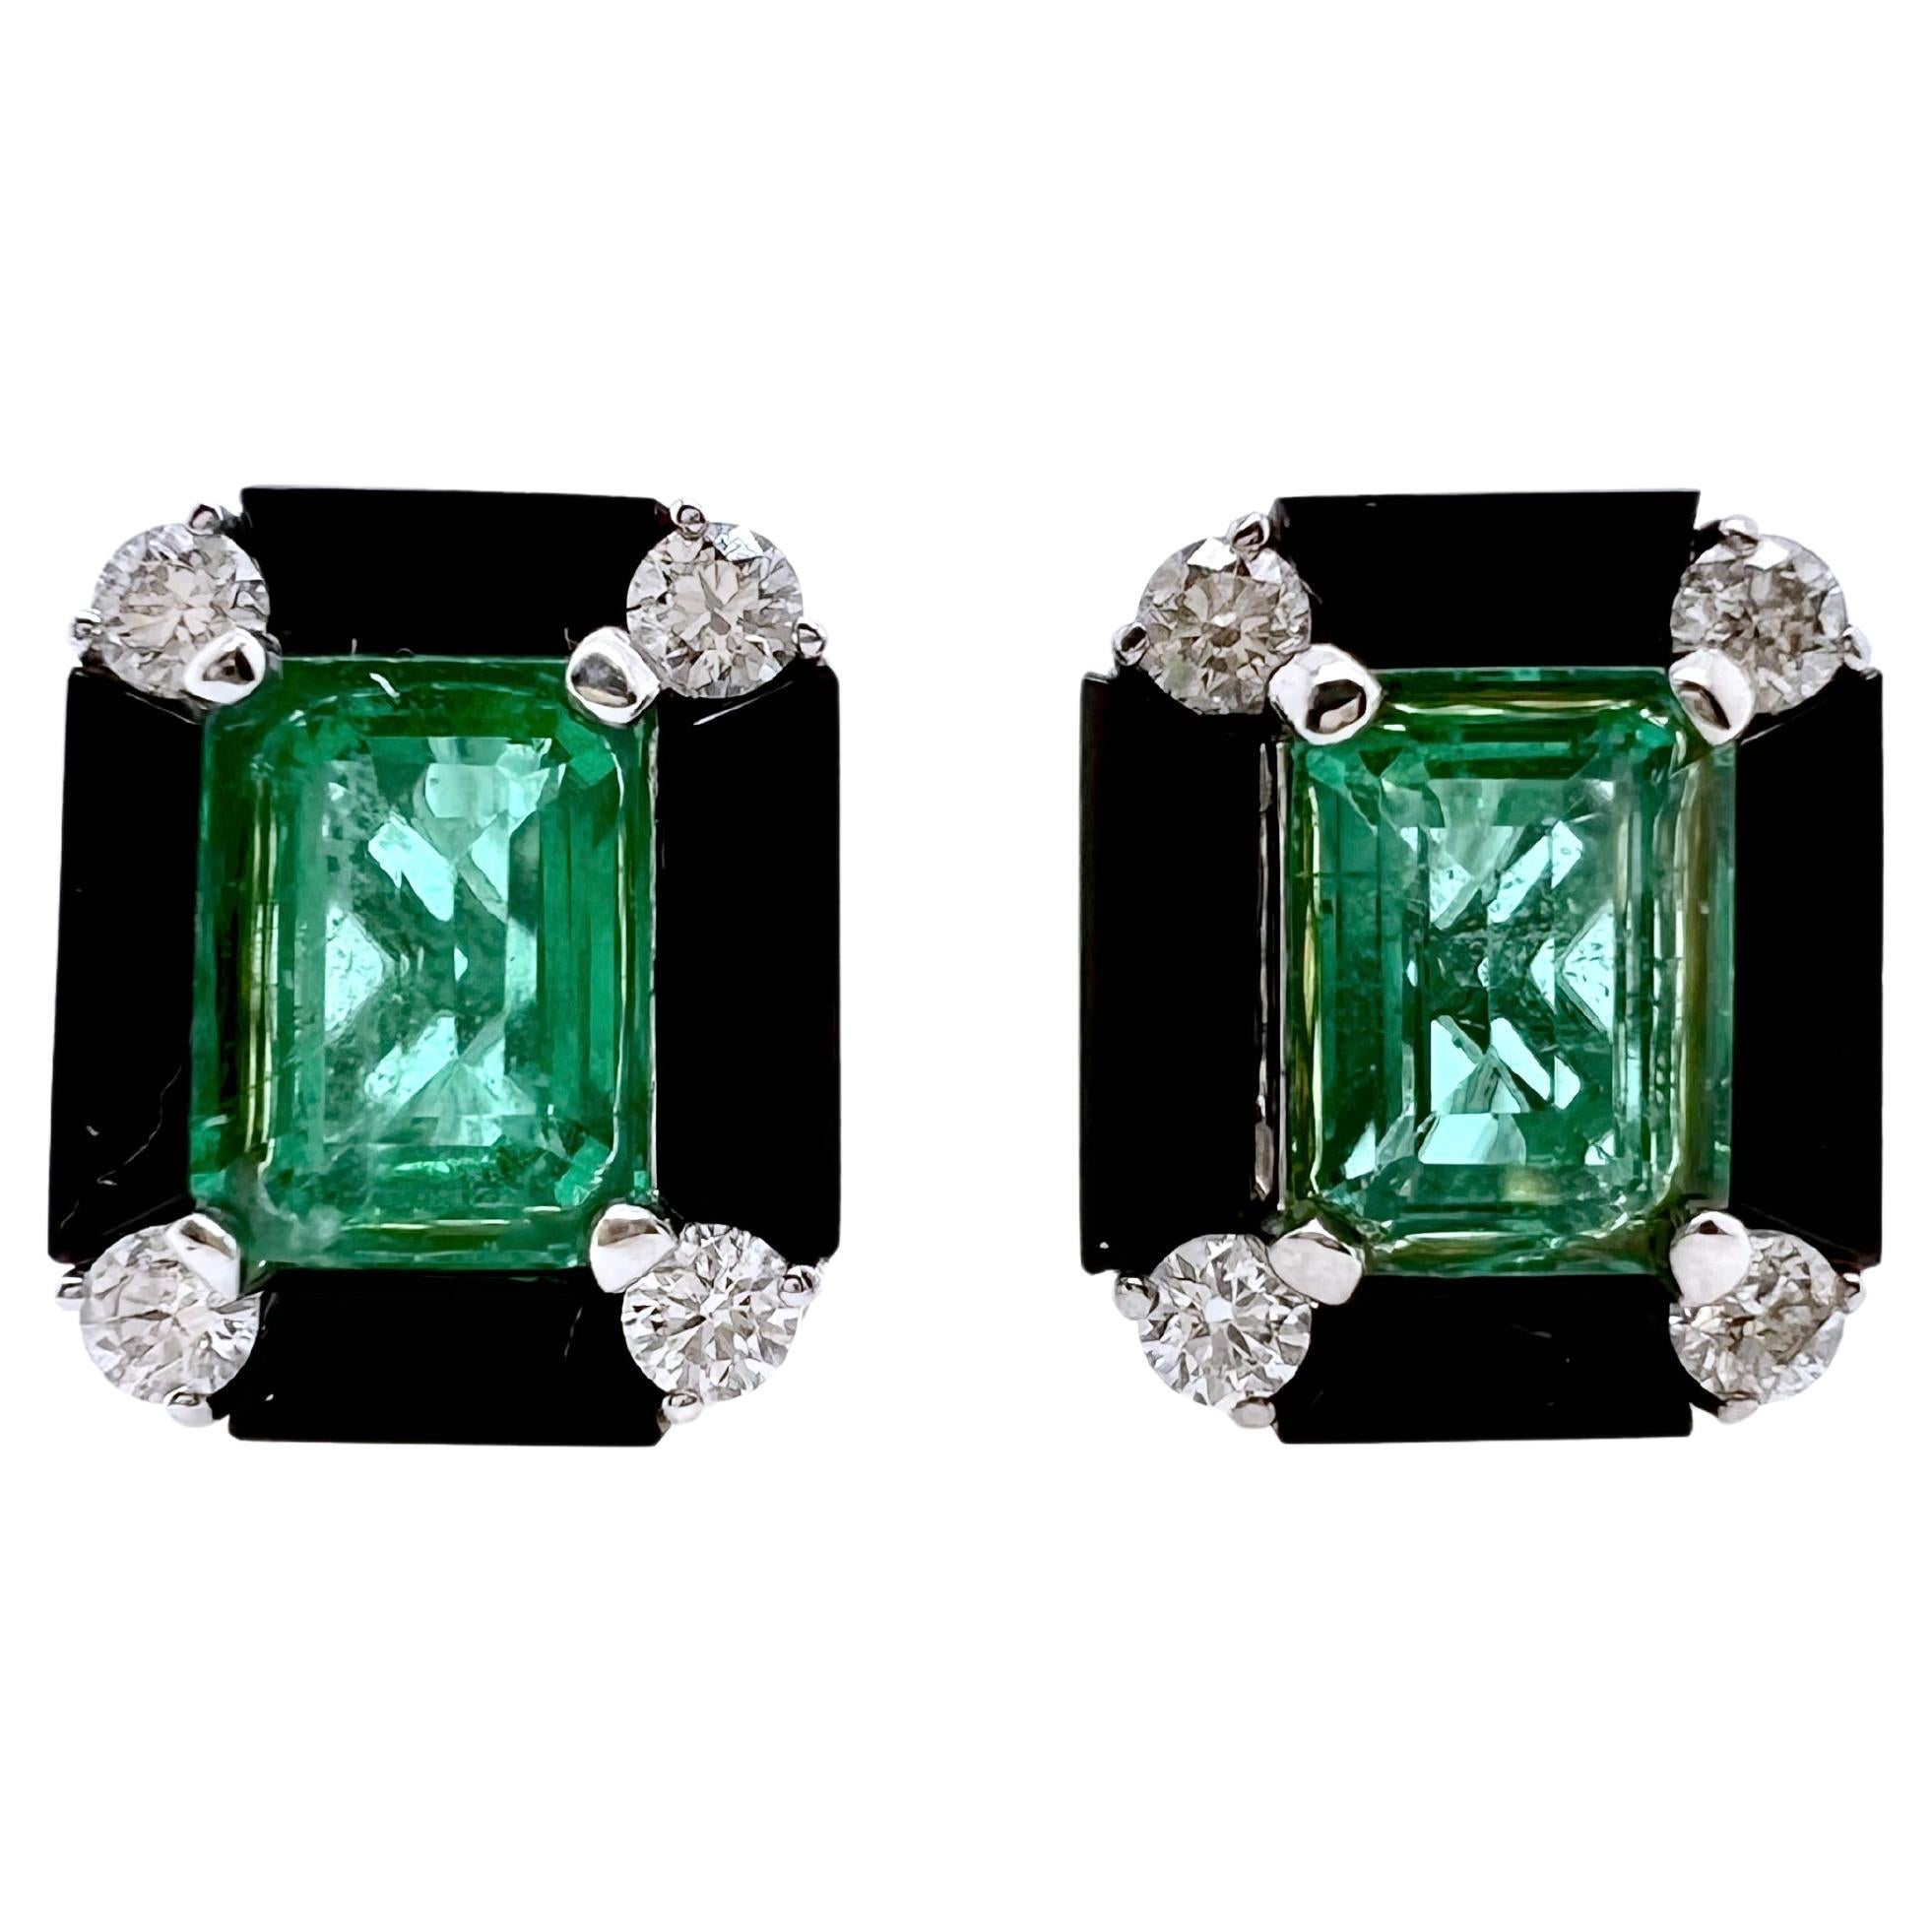 18k White Gold Black Onyx Art Deco Diamond Emerald Earrings